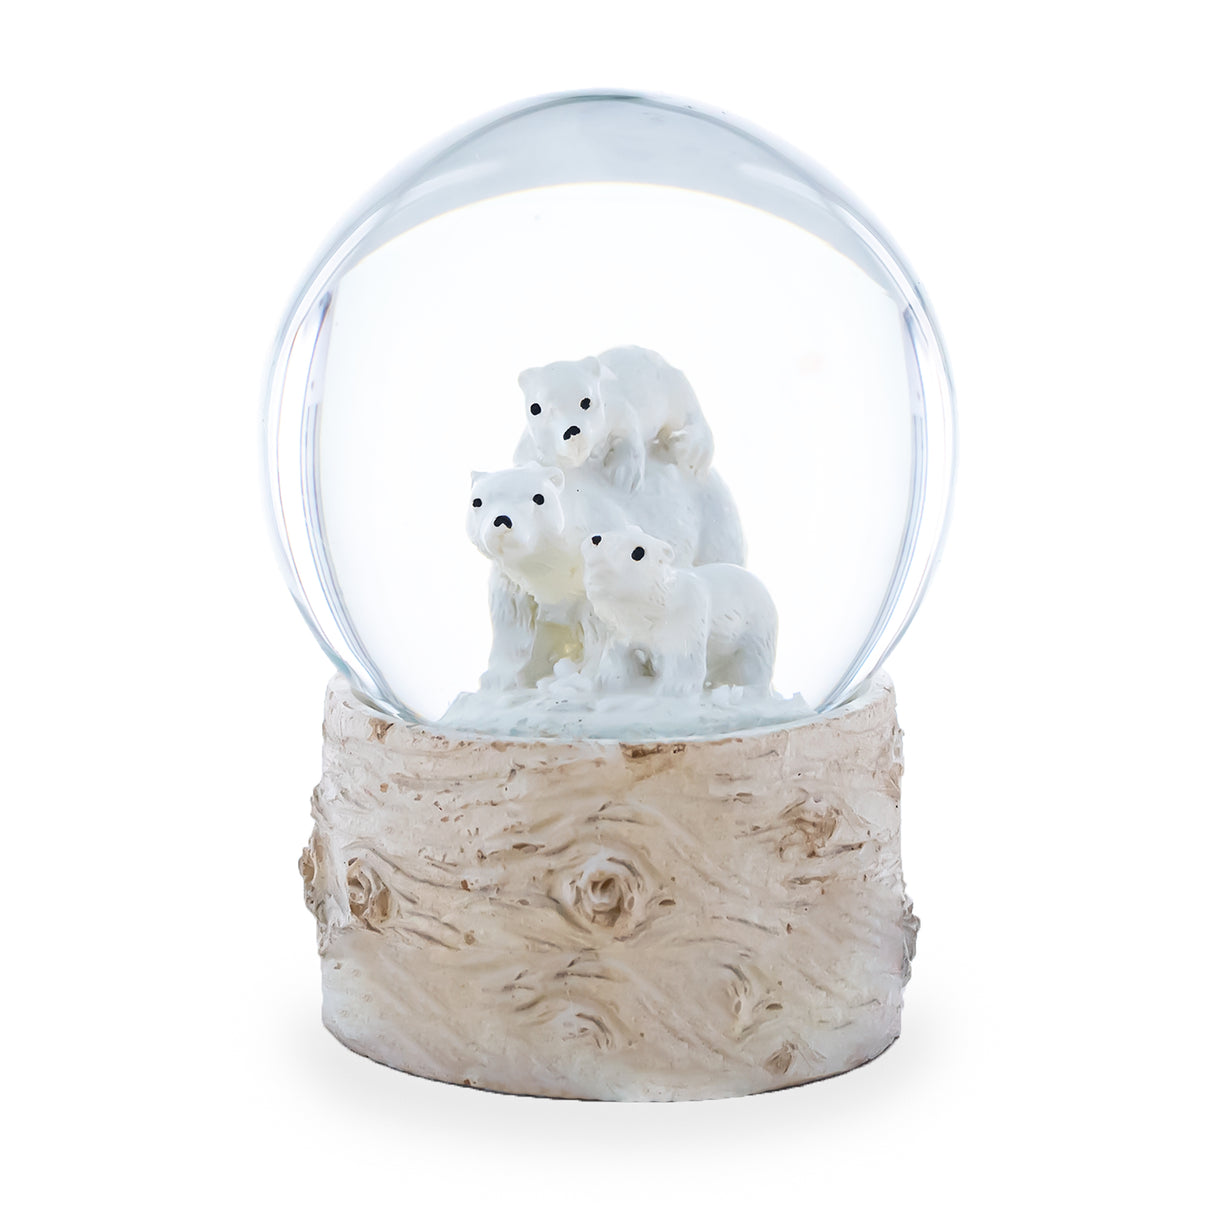 Resin Arctic Bears Mini Water Snow Globe: Polar Bear Family Delight in White color